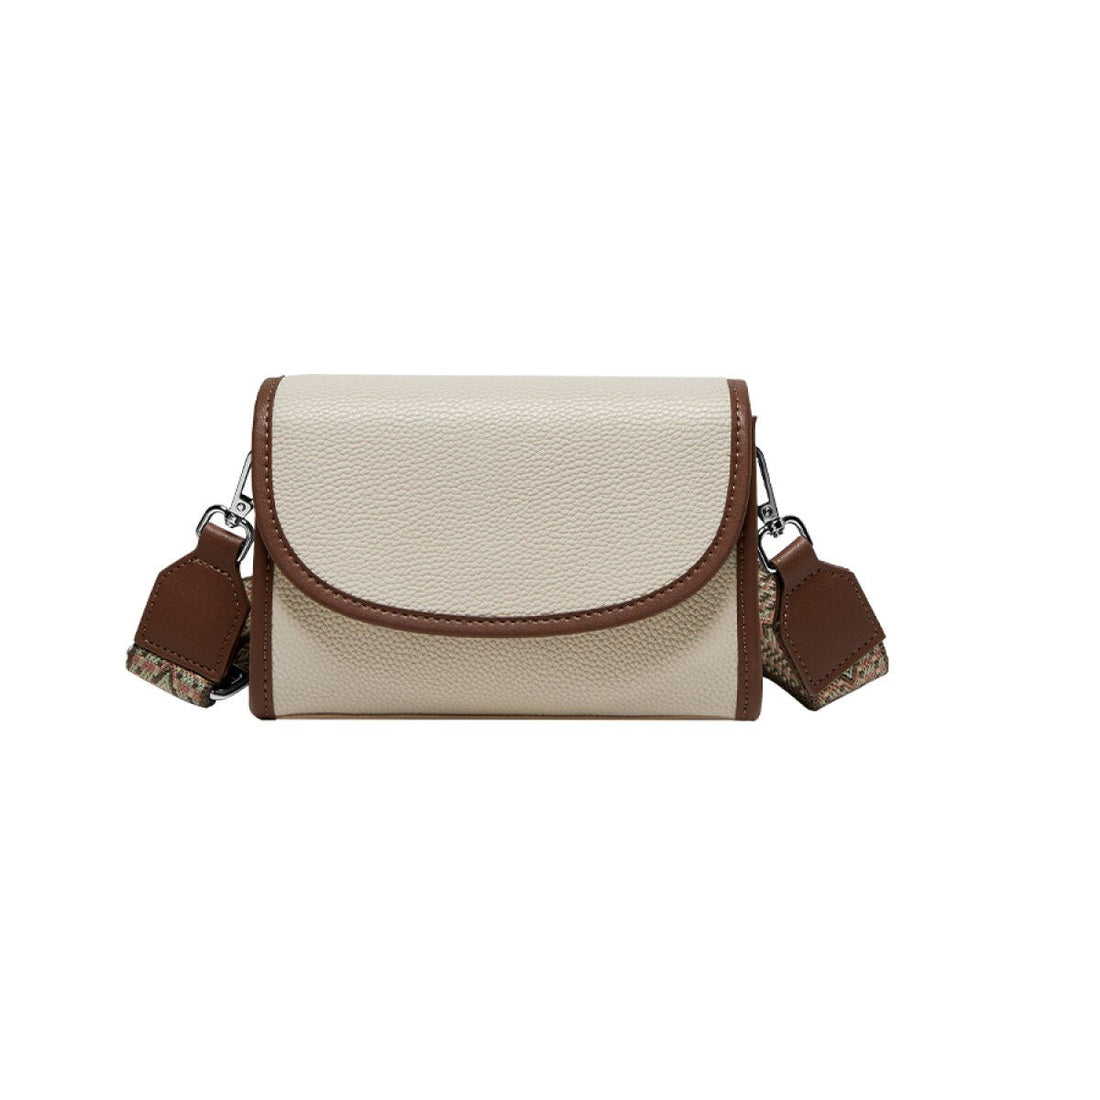 Ivory Dual-Strap Sleek Leather Crossbody Bag - 0cm